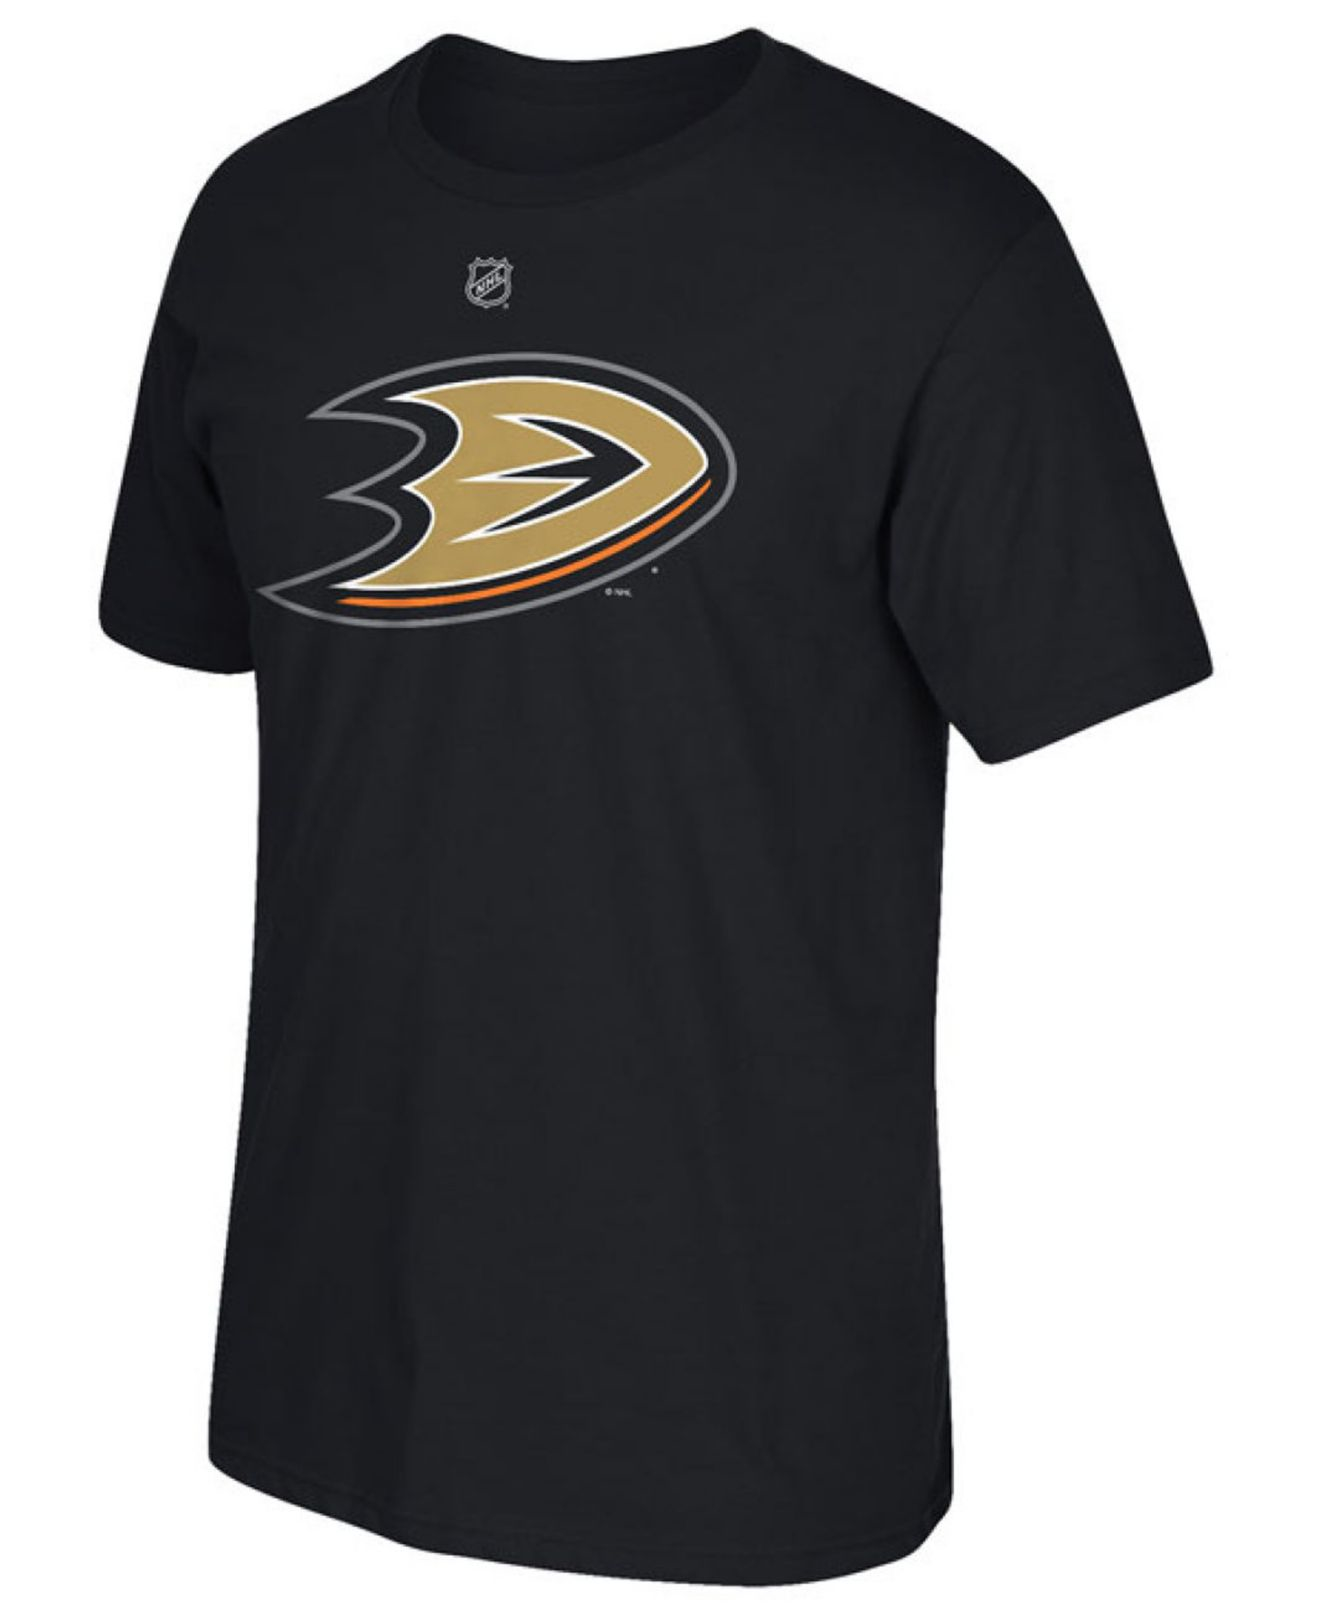 Lyst - Reebok Men's Corey Perry Anaheim Ducks Player T-shirt in Black ...